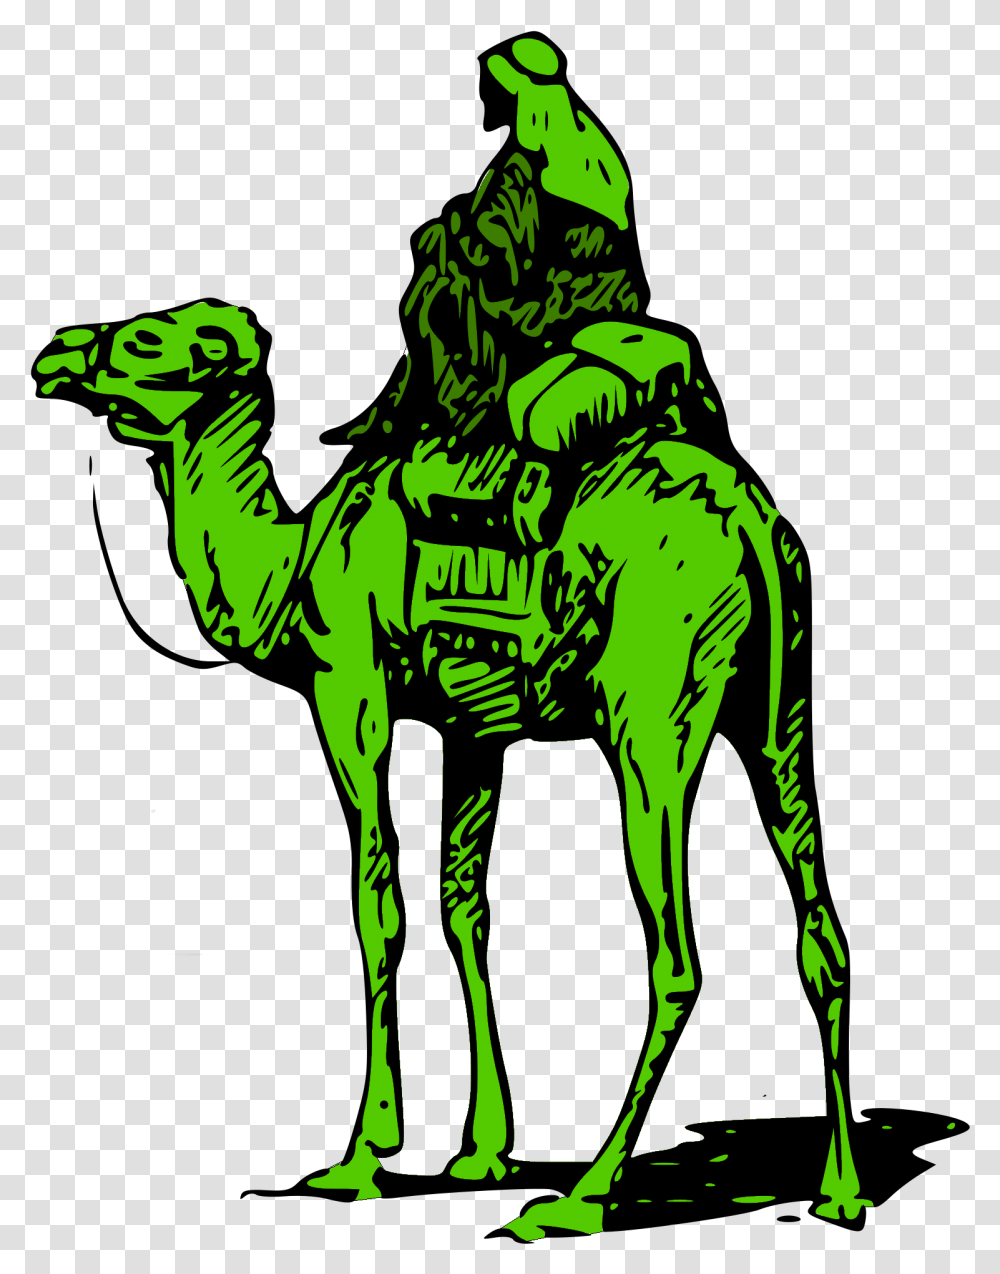 United Camel Darknet Bitcoin States Road Silk Clipart Dark Web Silk Road Logo, Alien, Person, Human, Statue Transparent Png